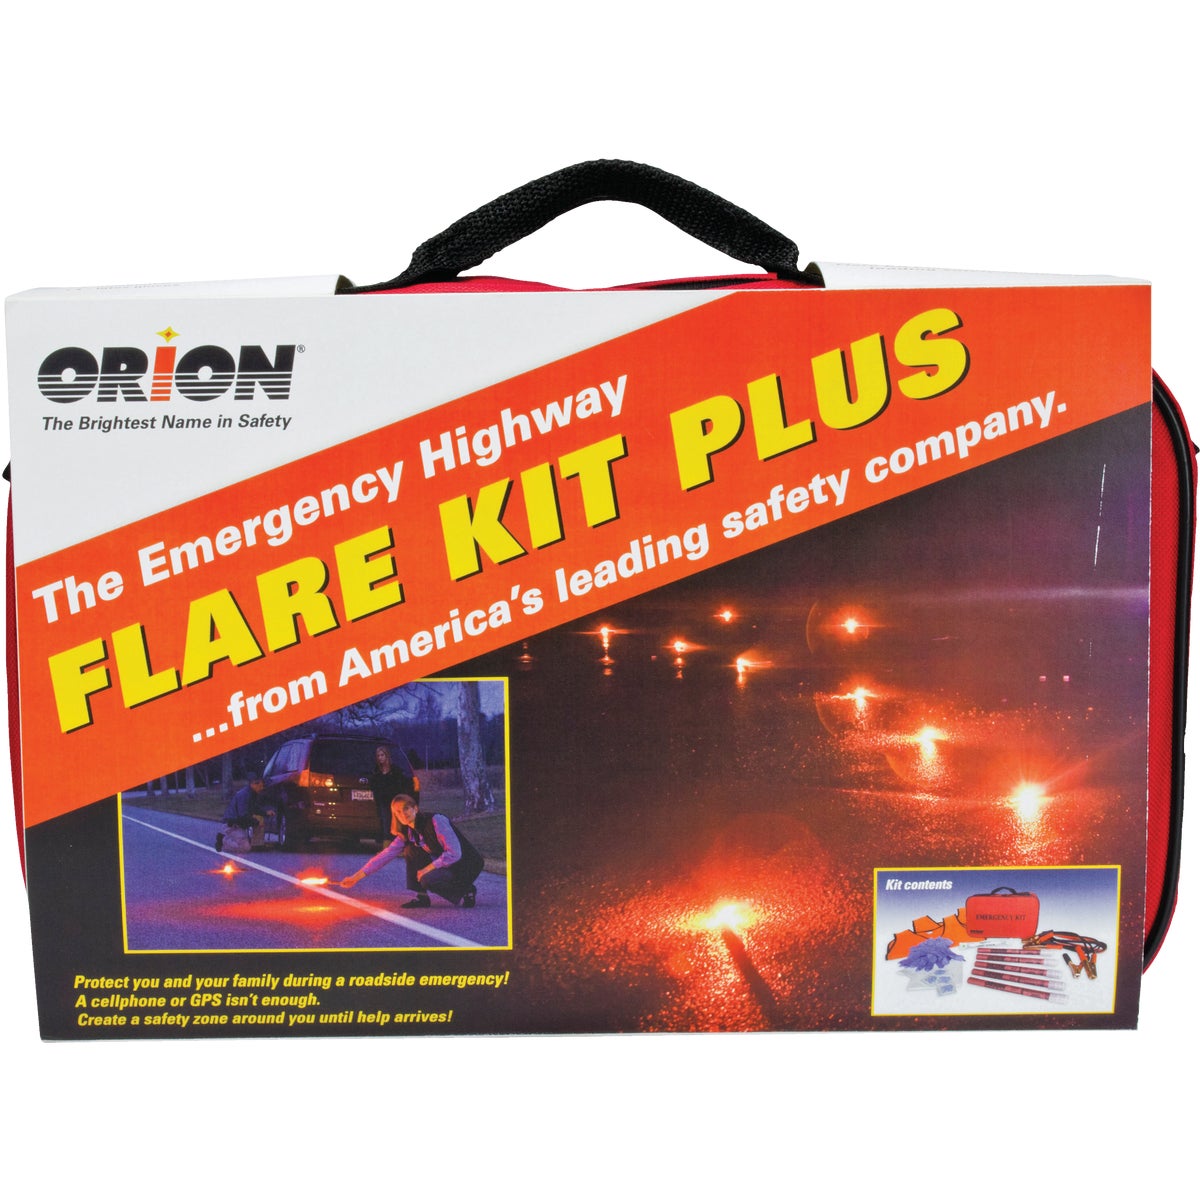 Orion Flare Kit Plus Emergency Road Kit (19-Piece)